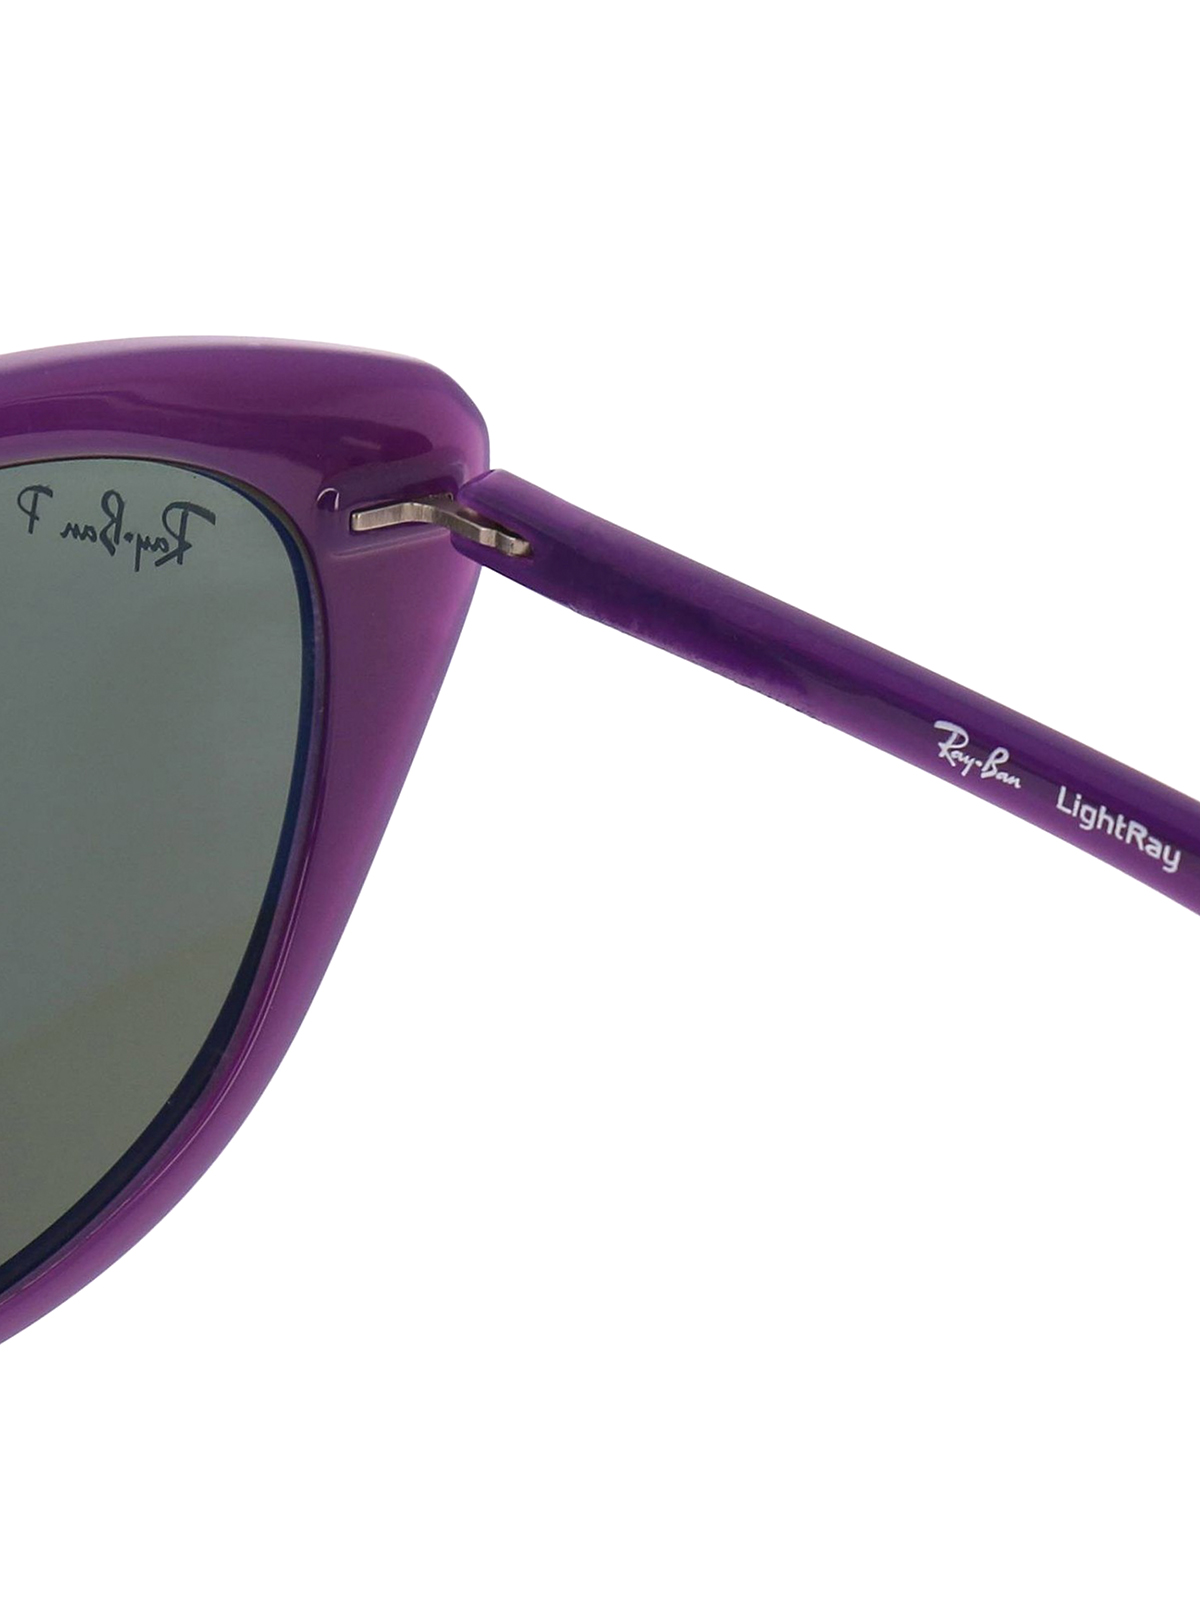 ray ban sunglasses purple